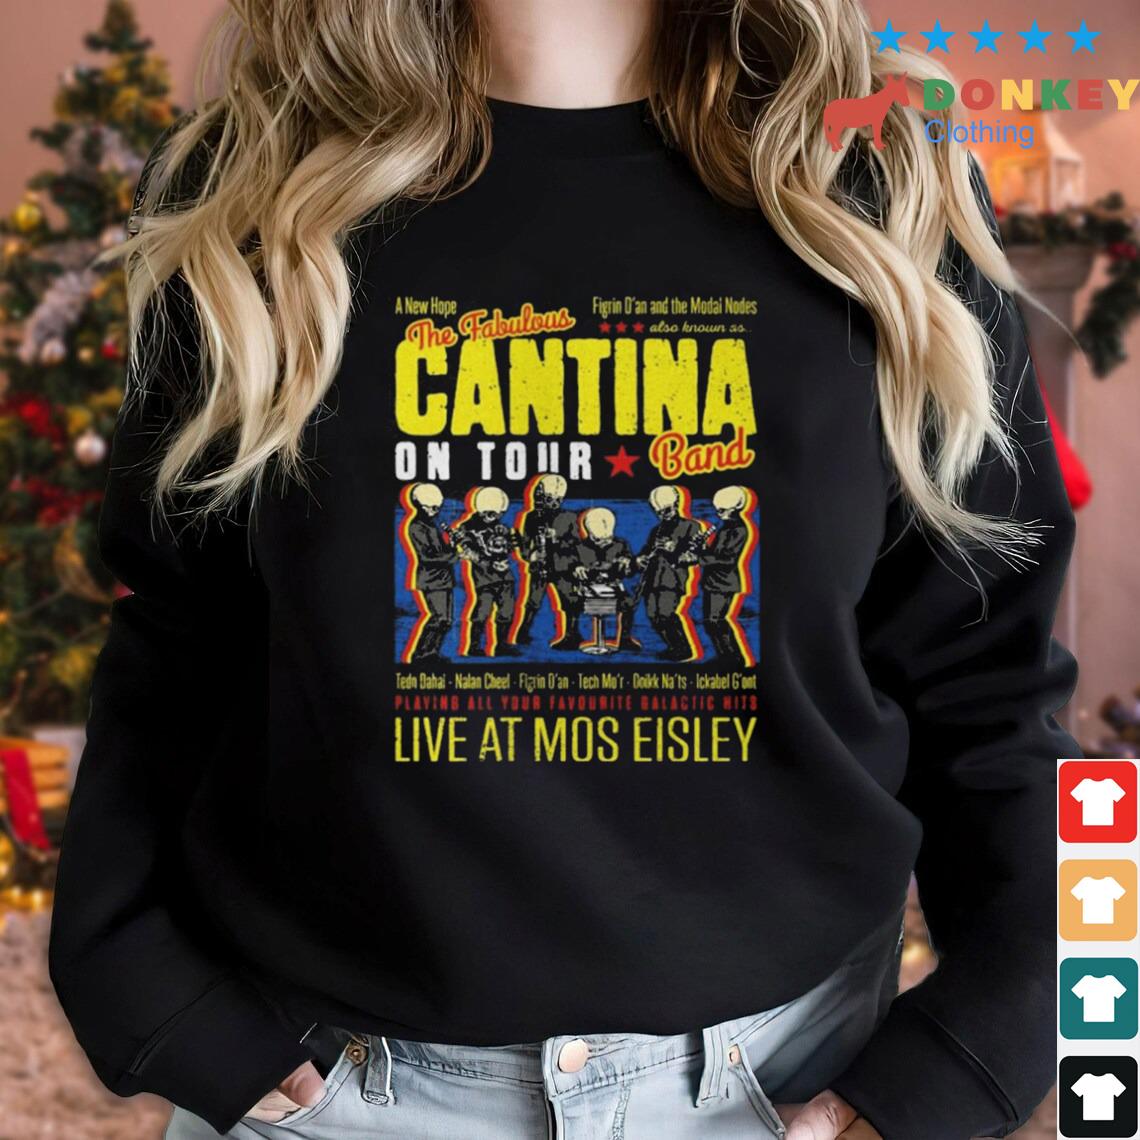 The Fabulous Cantina On Tour Band live at Mos Eisley Shirt